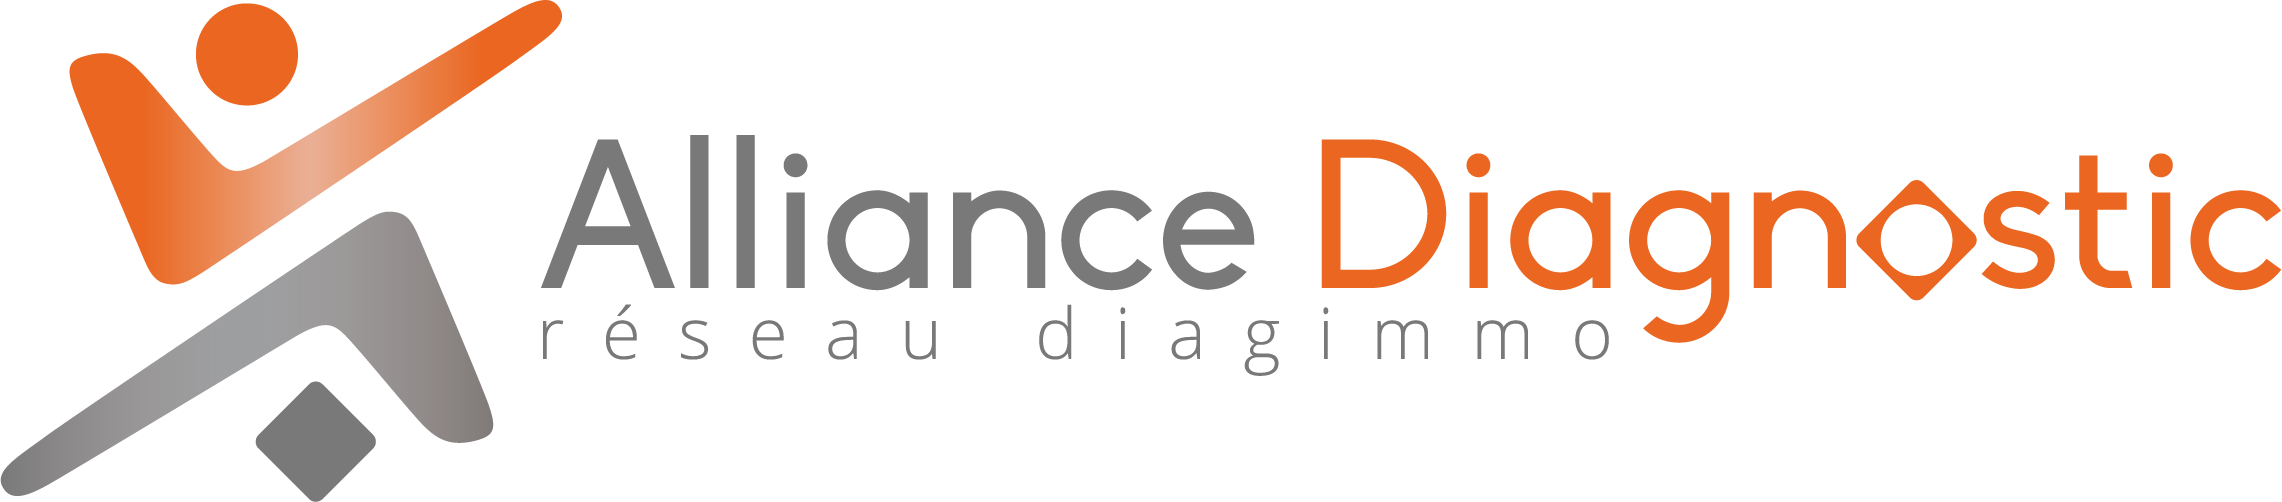 Logo Alliancediagnostic 2017 05 2